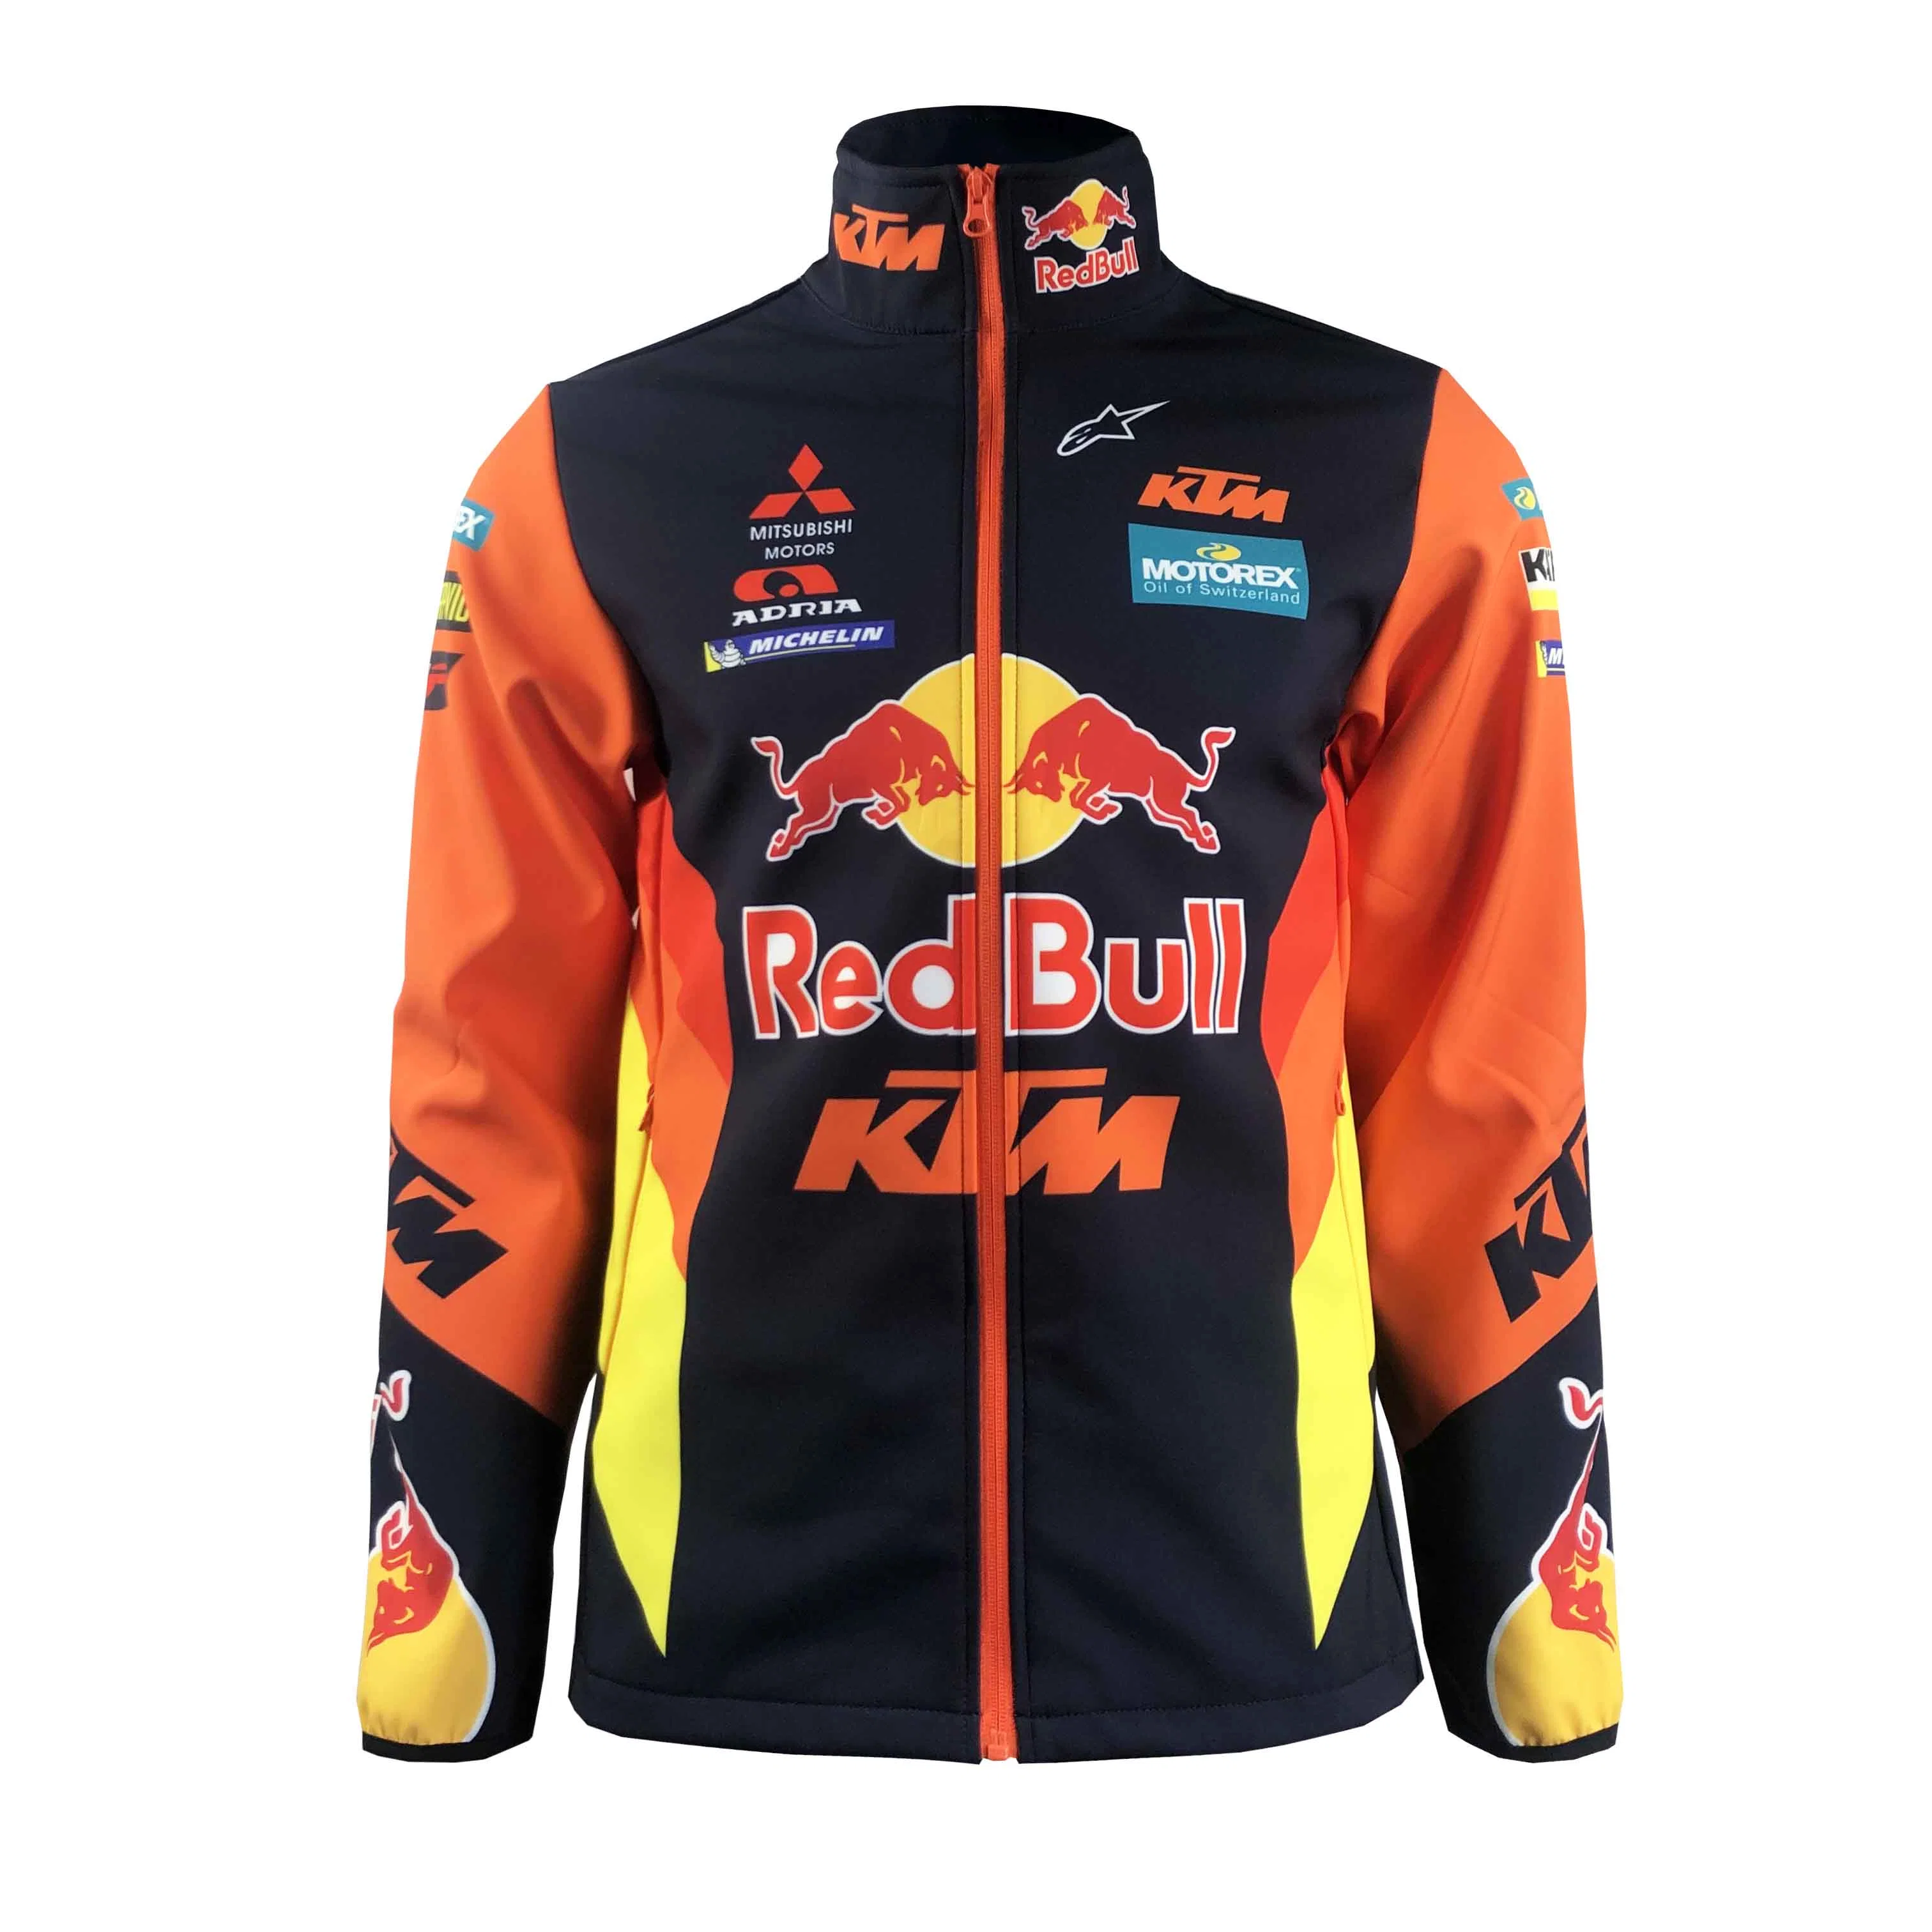 F1 Jacket Racing Apparel Sublimation Club Clothing Staff Wear Events Nascar Racing Jacket Motorcycle Jacket